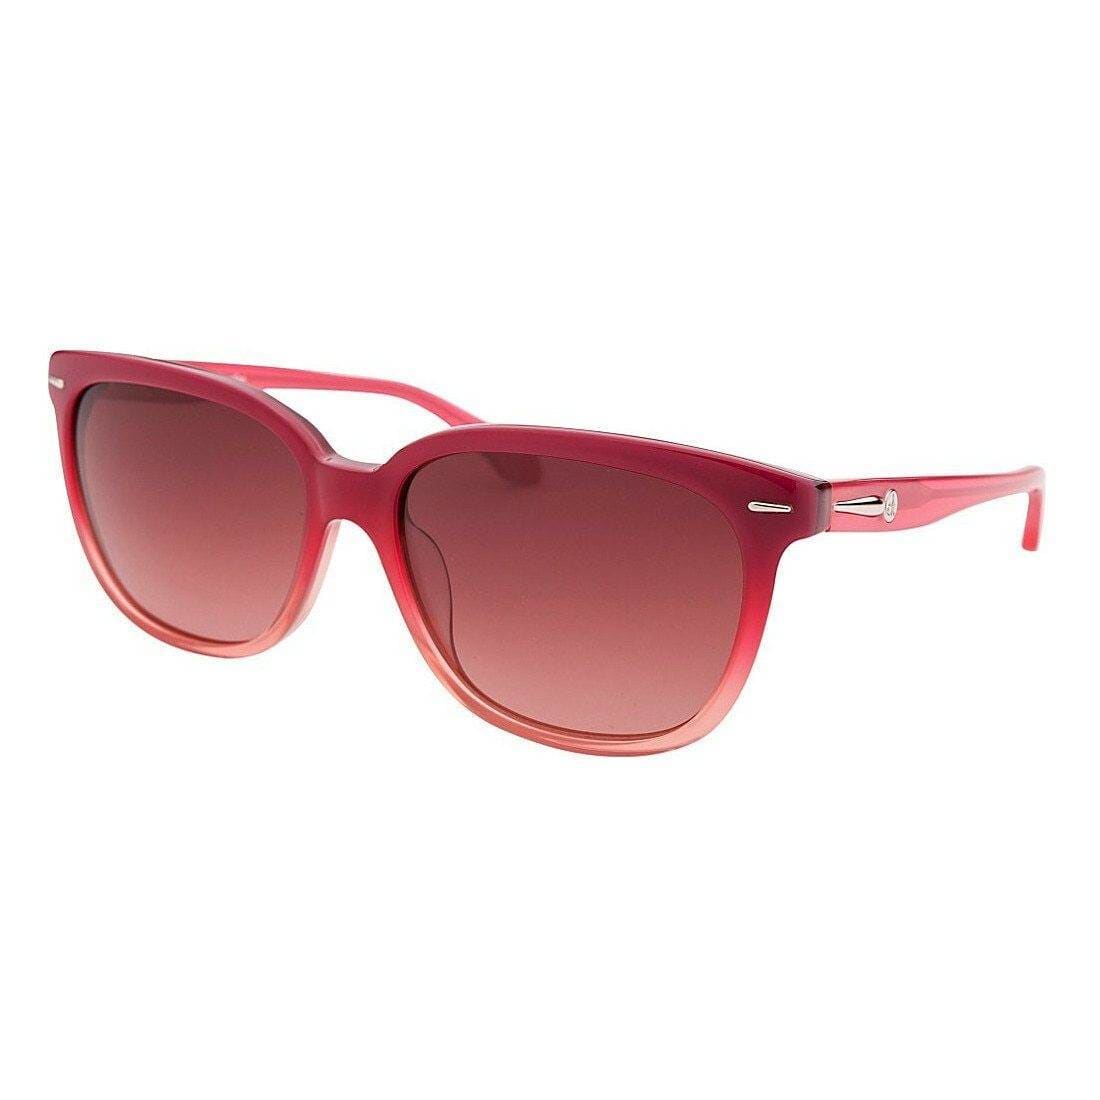 Women's Sunglasses in Pink | Joy Therapy sunglasses | Dolce&Gabbana